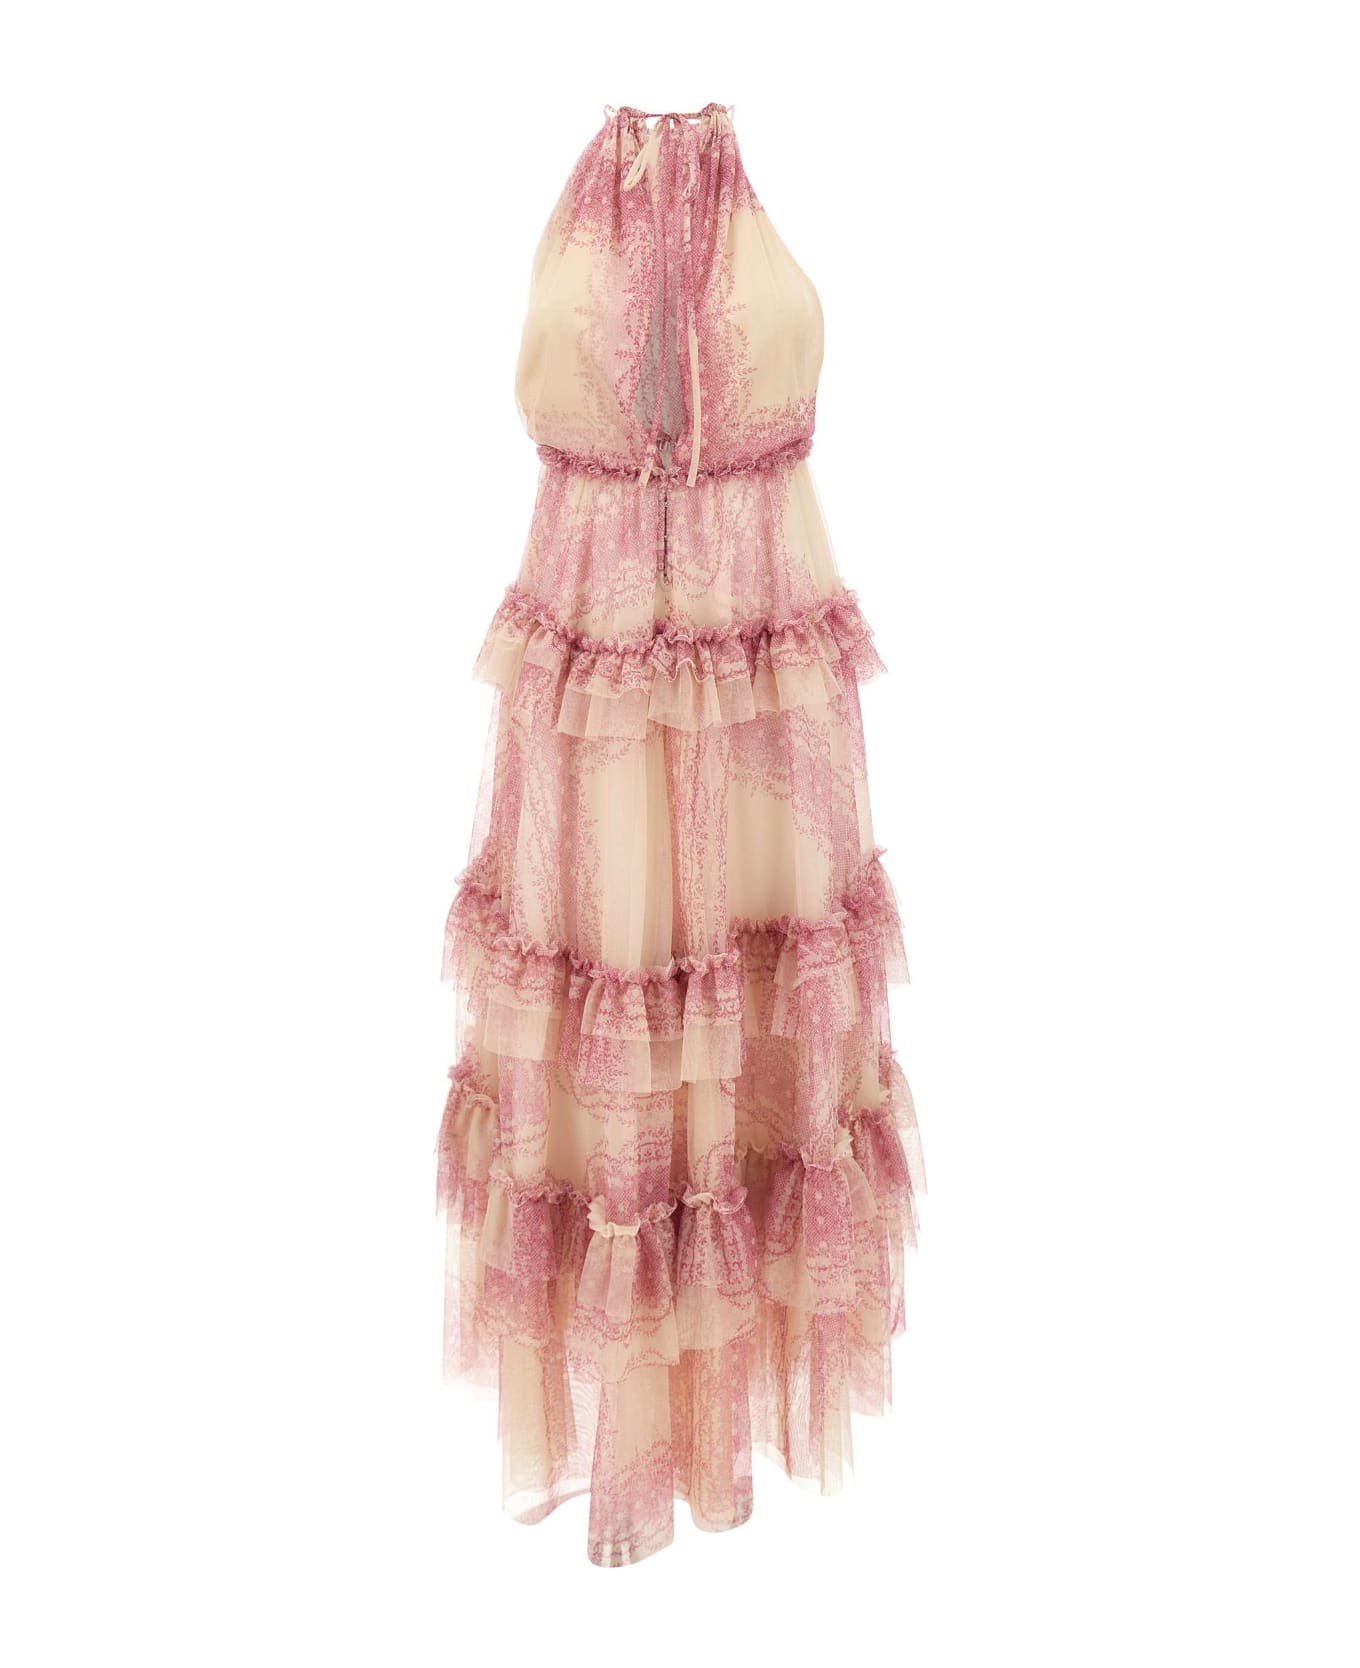 Philosophy di Lorenzo Serafini Tulle Dress - Pink/Beige